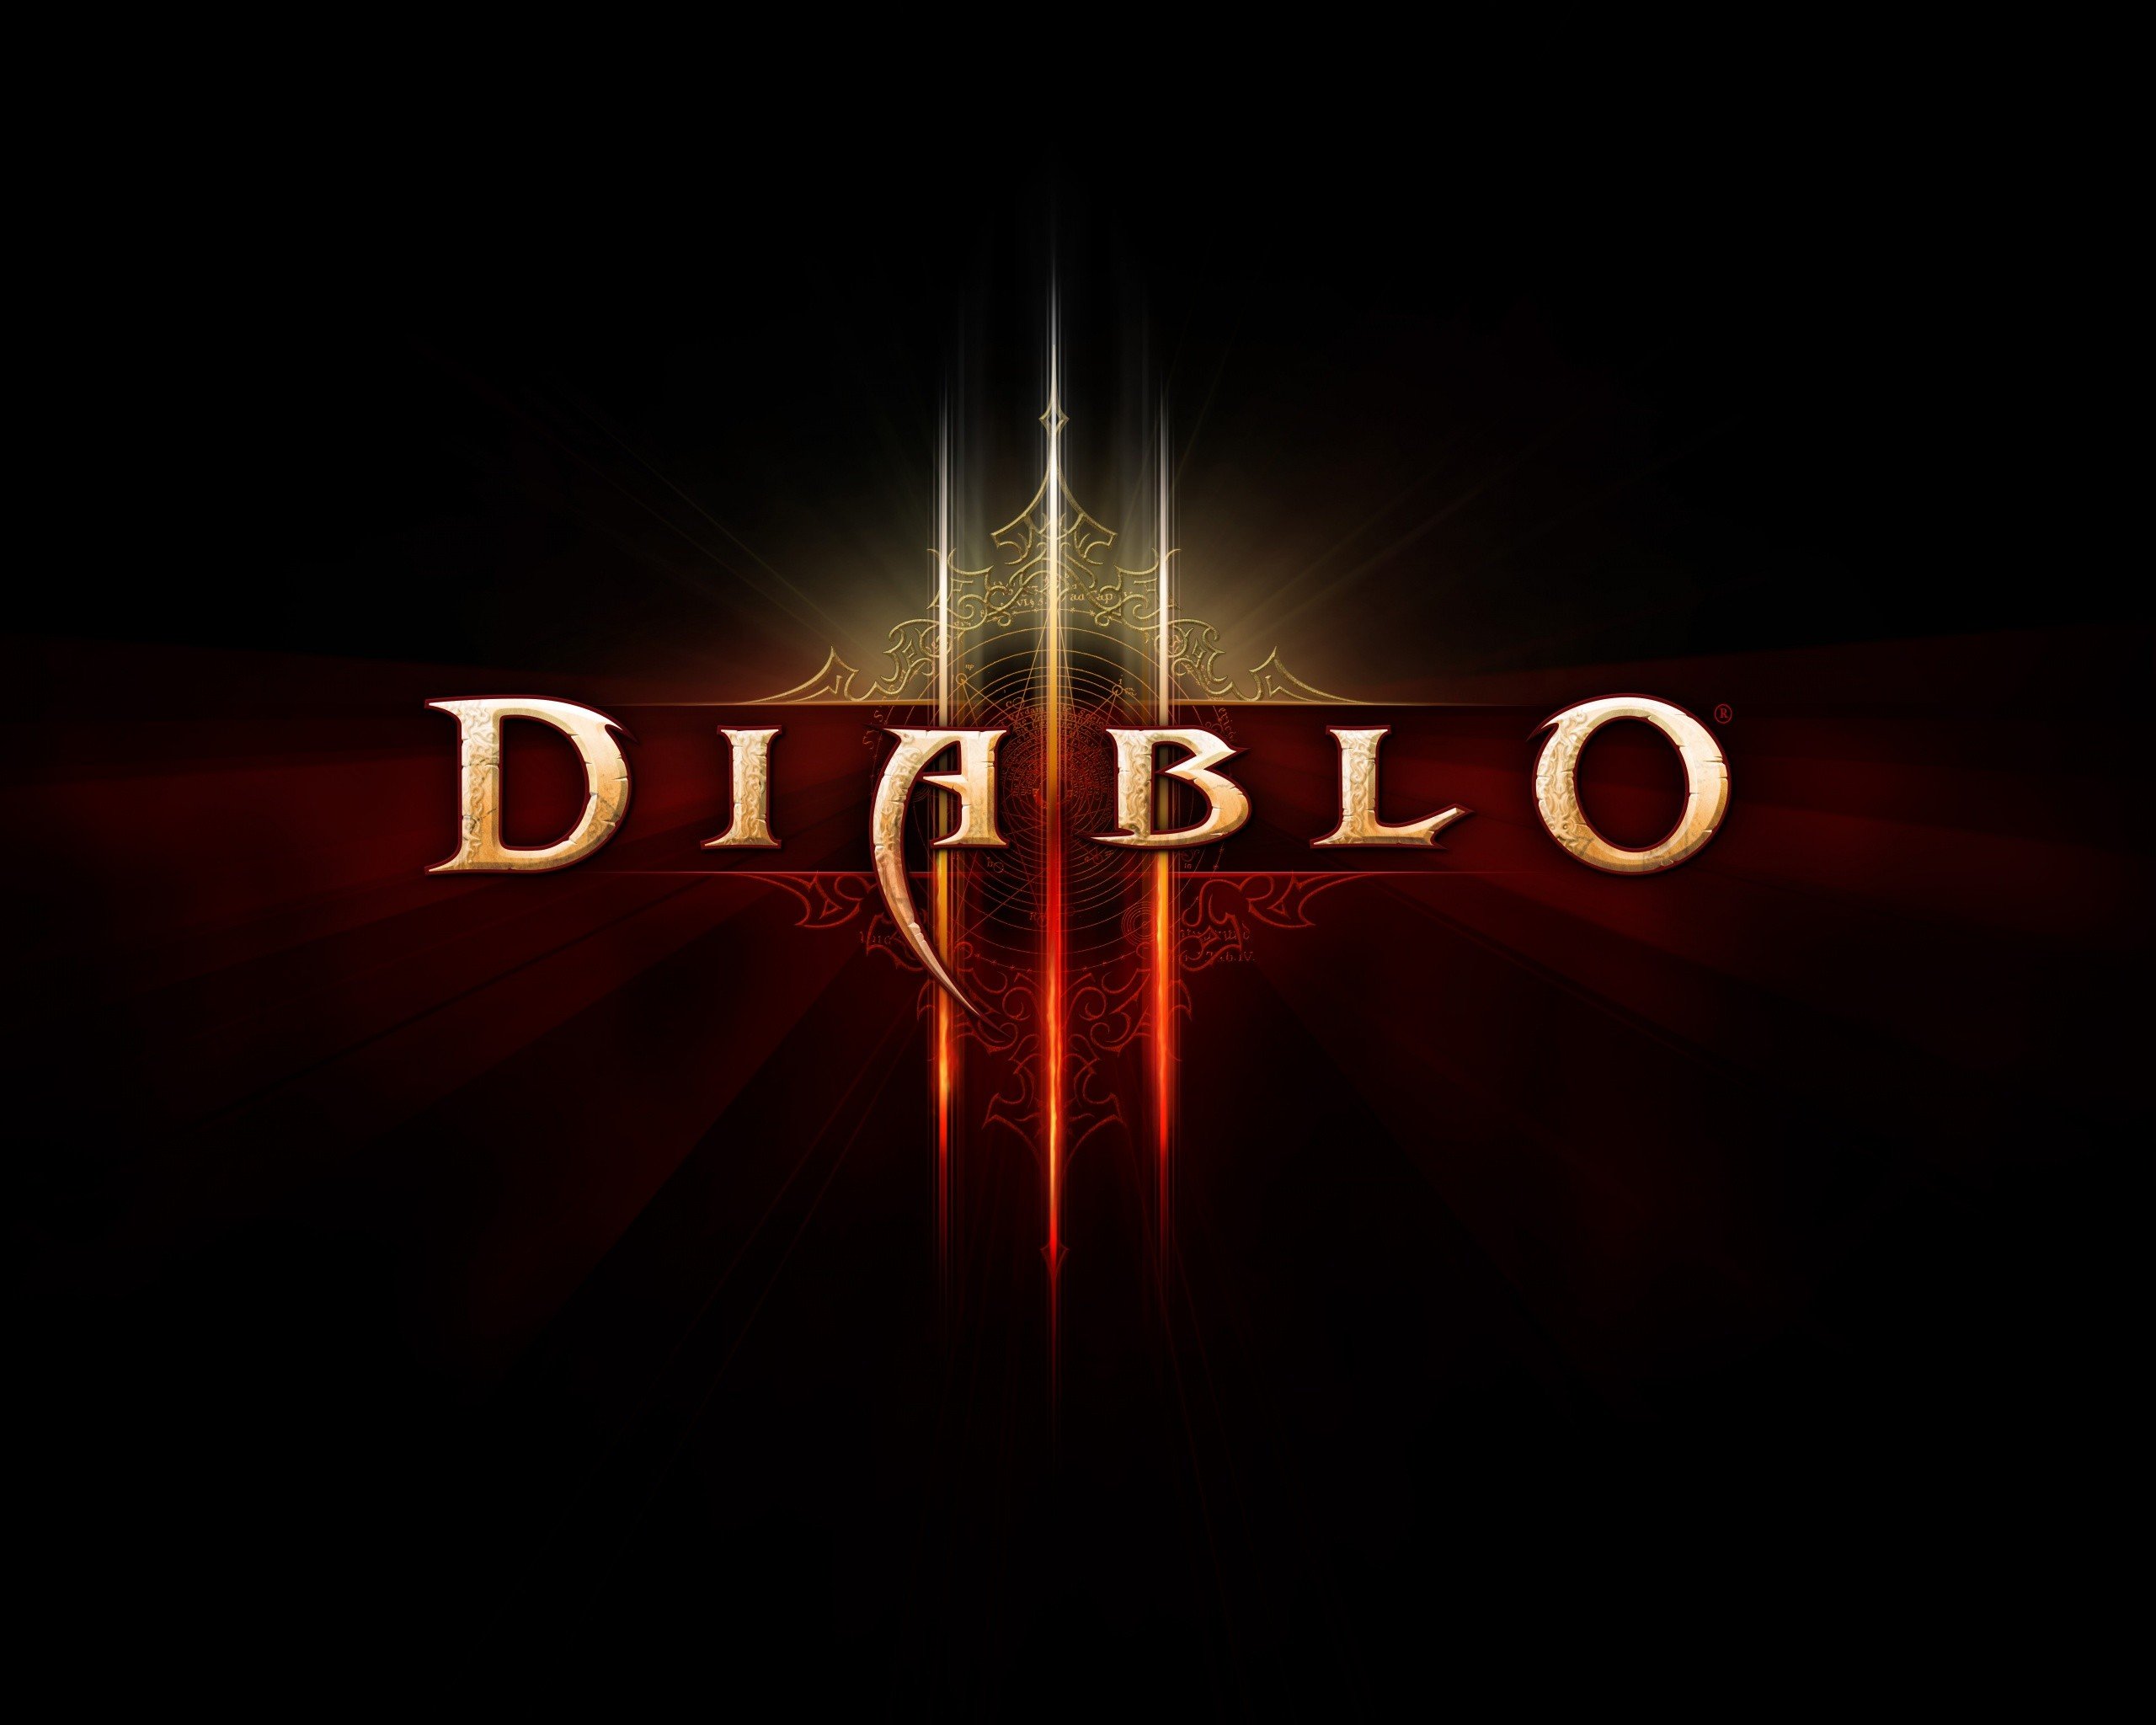 Awesome Diablo 3 free wallpaper ID:31027 for hd 2560x2048 desktop